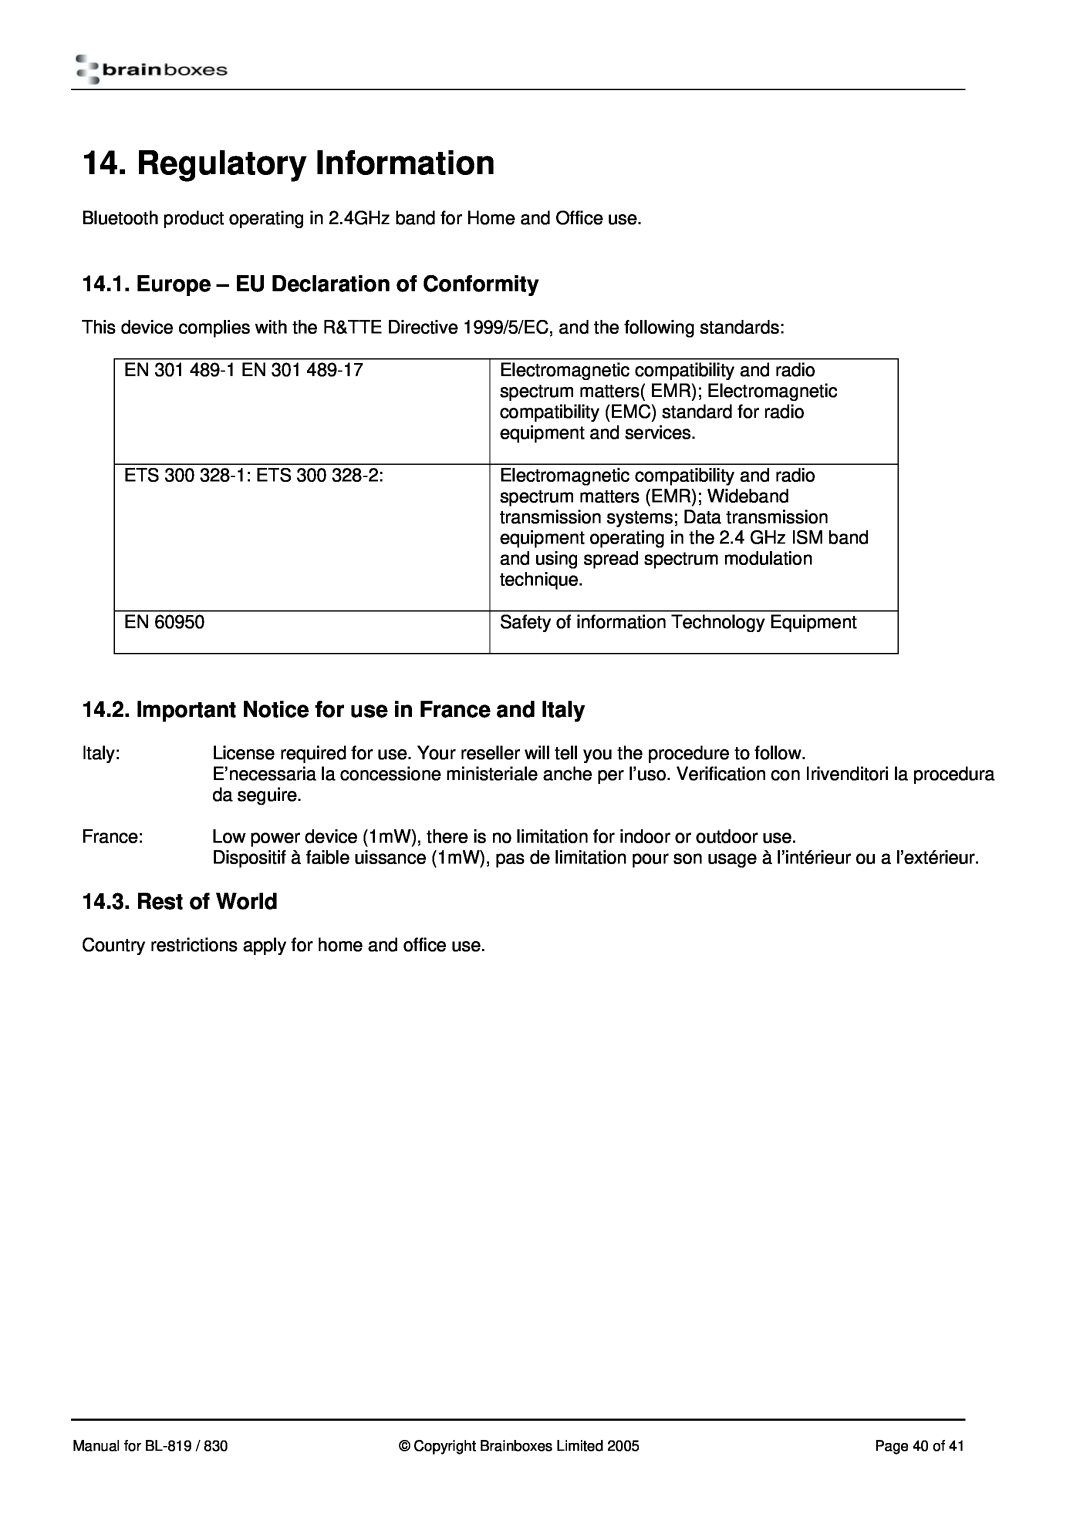 Brainboxes BL-830, BL-819 manual Regulatory Information, Europe - EU Declaration of Conformity, Rest of World 